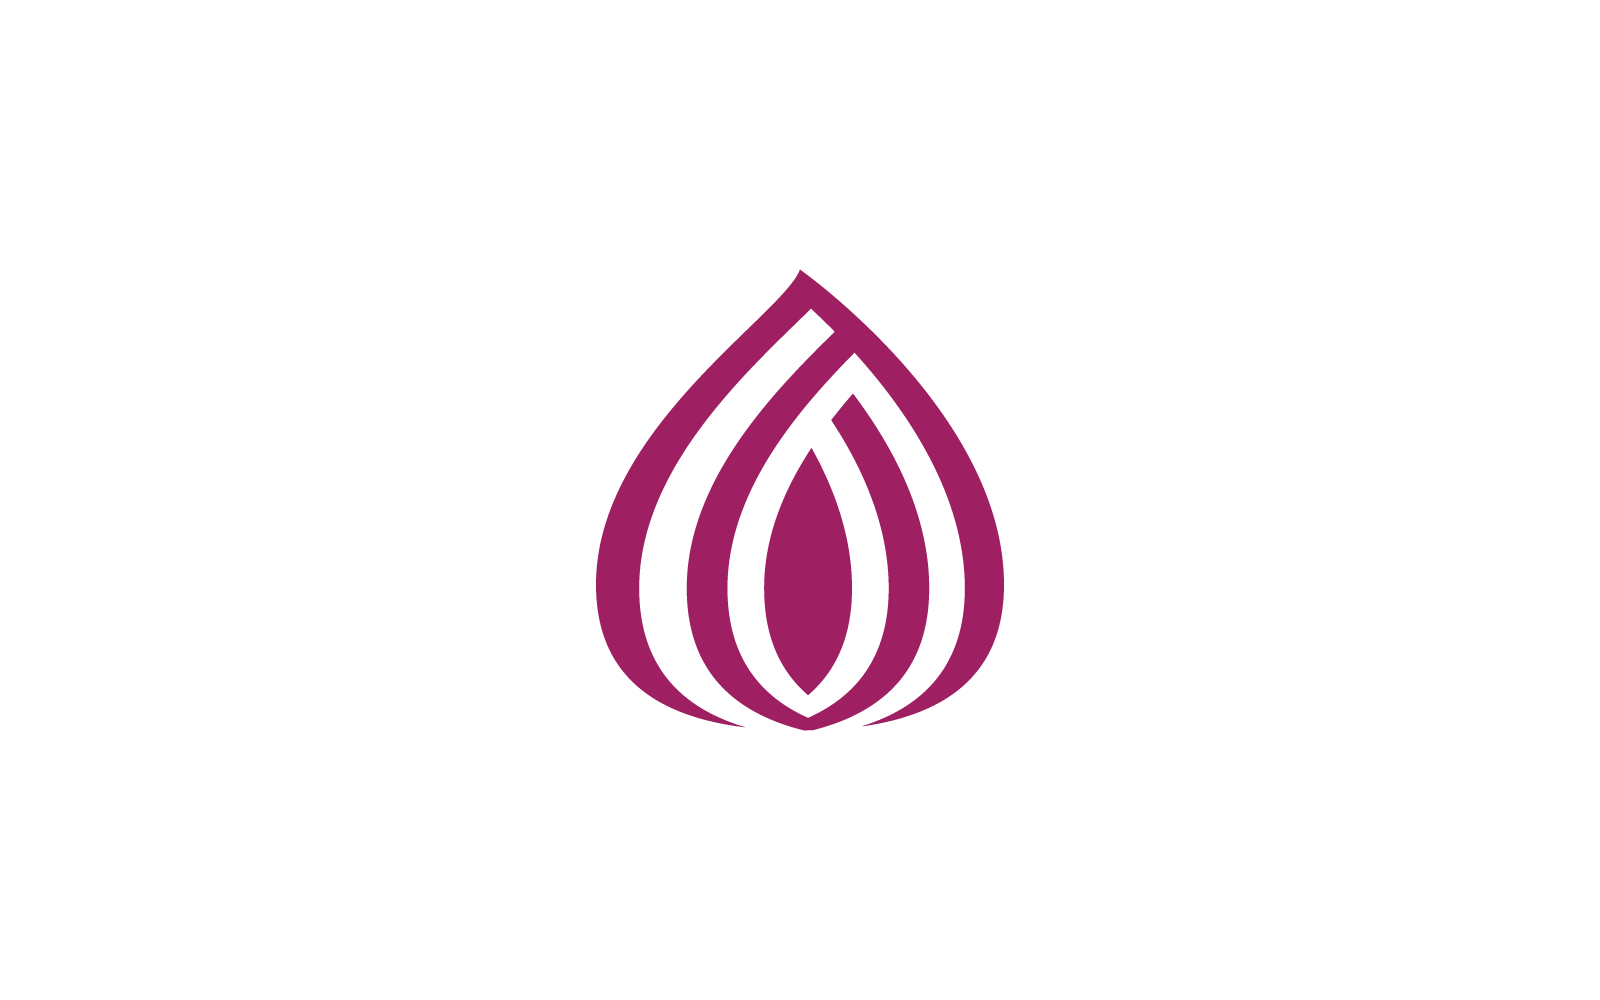 Onion on white illustration background vector design Logo Template